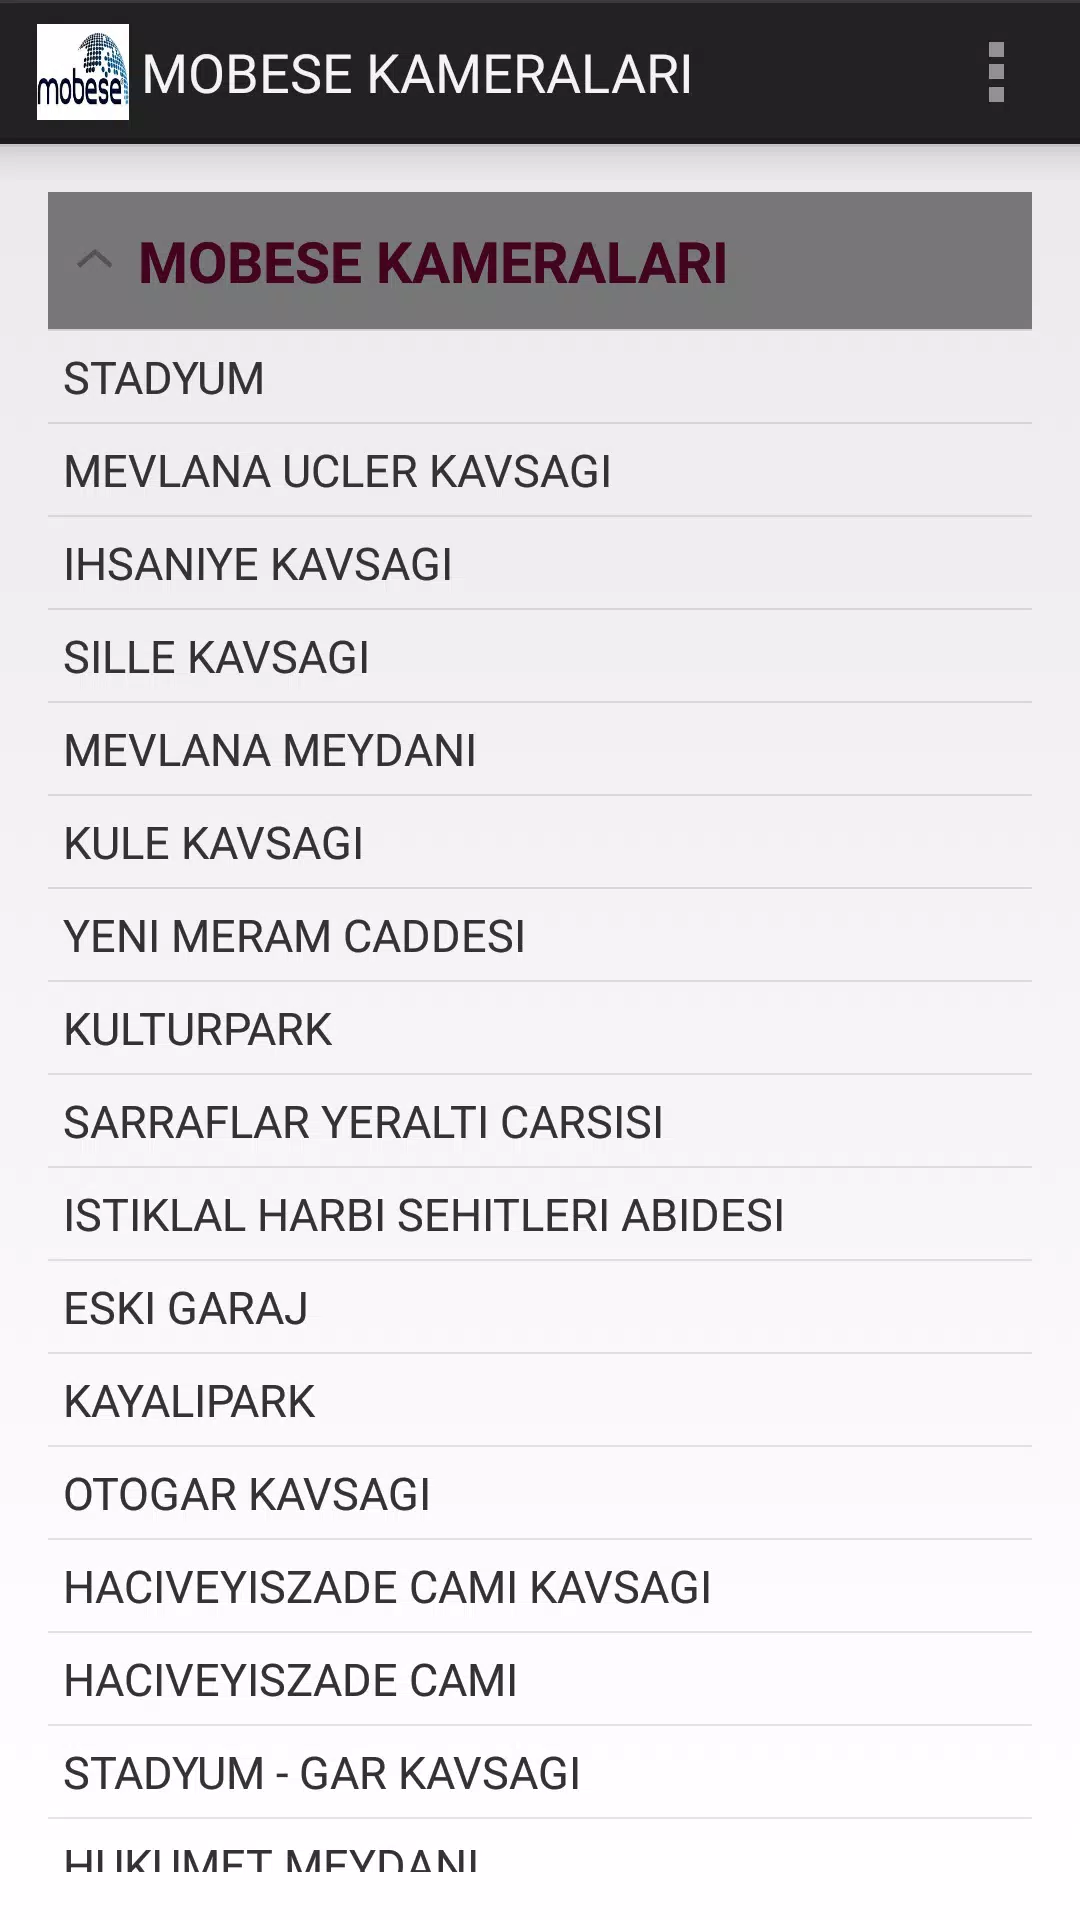 Konya Mobese Kameraları APK for Android Download